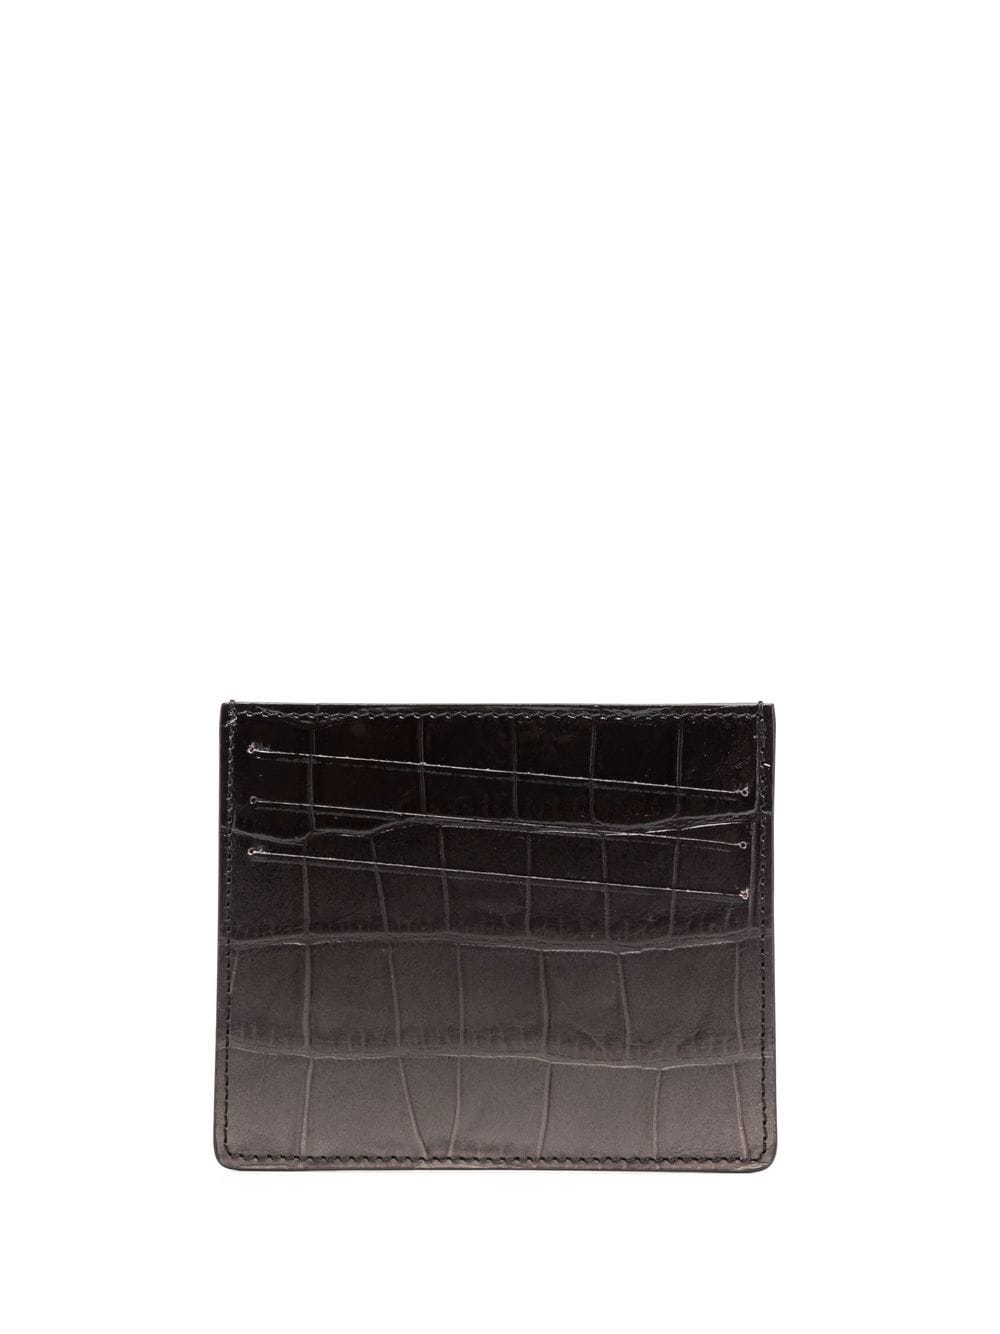 Maison Margiela Black Calf Leather Wallet In Nero